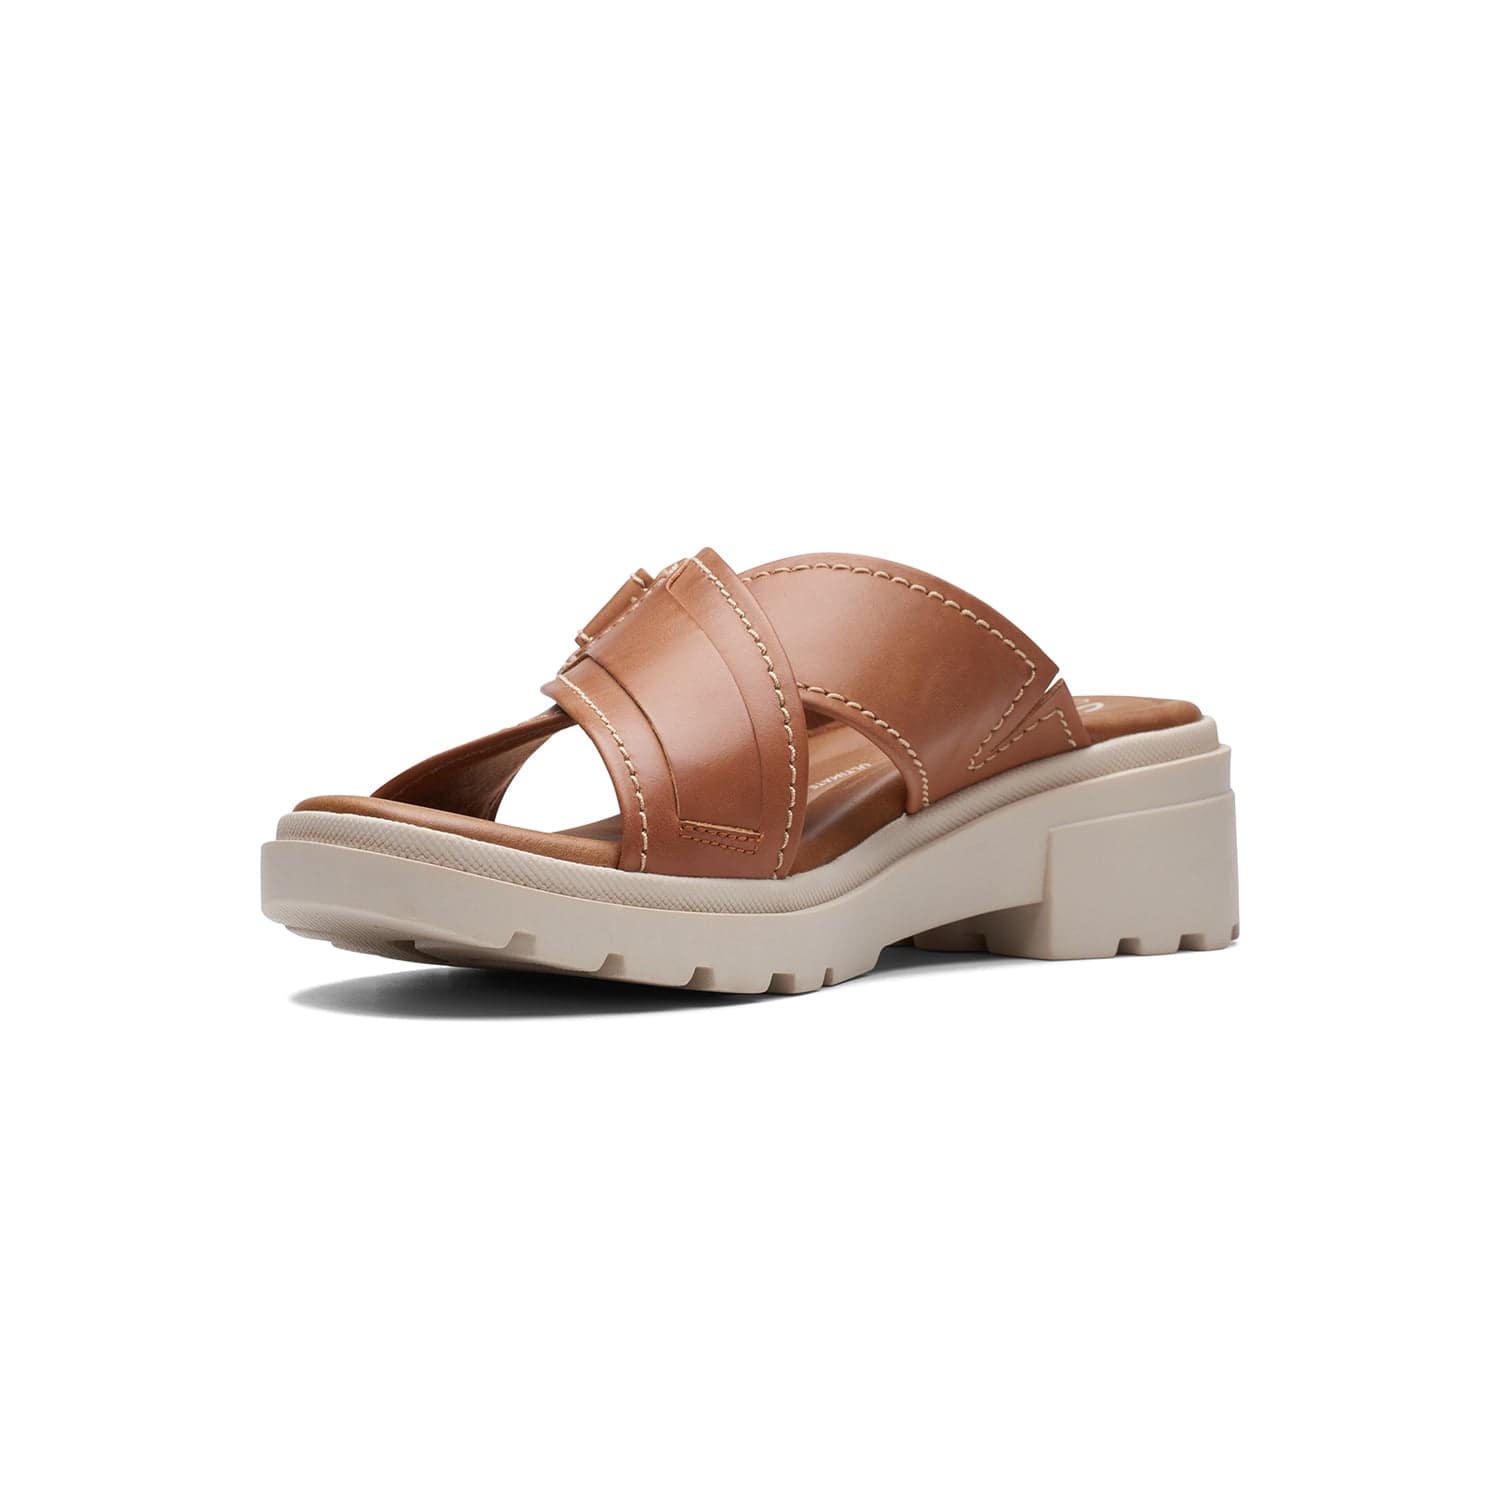 Clarks Coast Cross - Sandals - Tan Leather - 261719075 - E Width (Wide Fit)